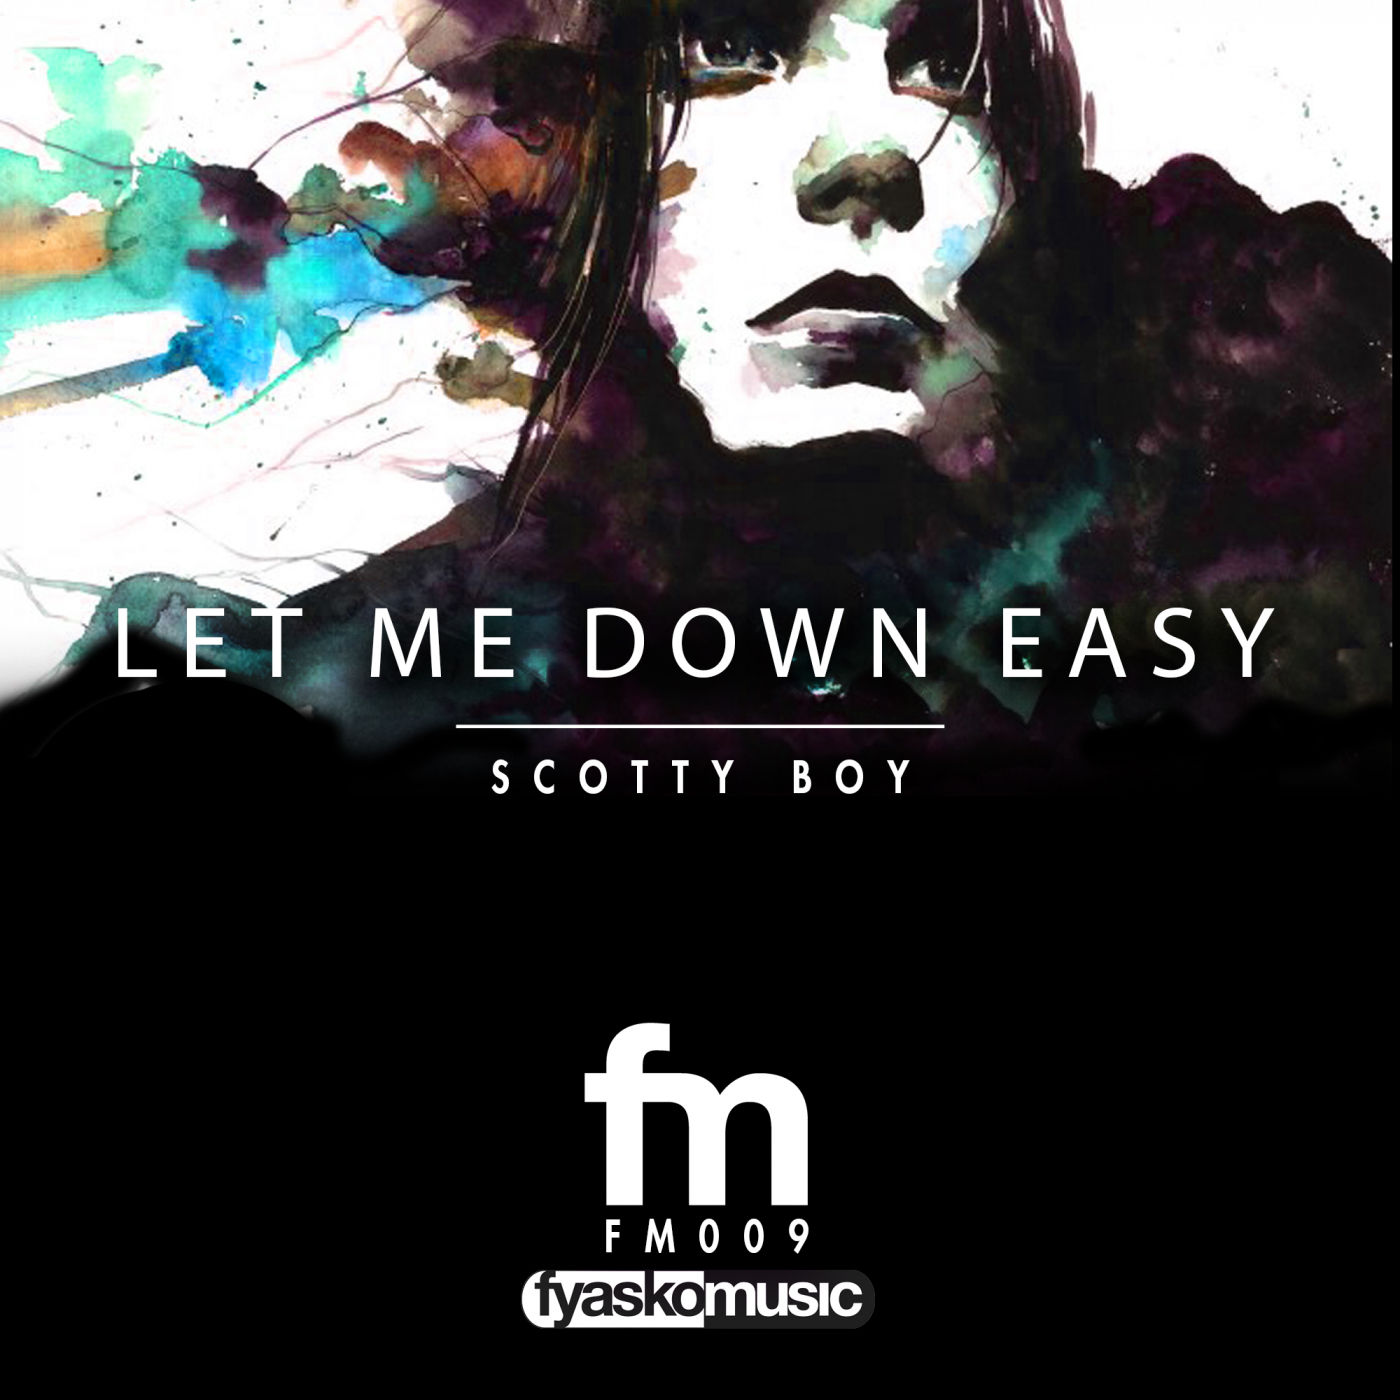 Scotty Boy - Let Me Down Easy / Fyasko Music